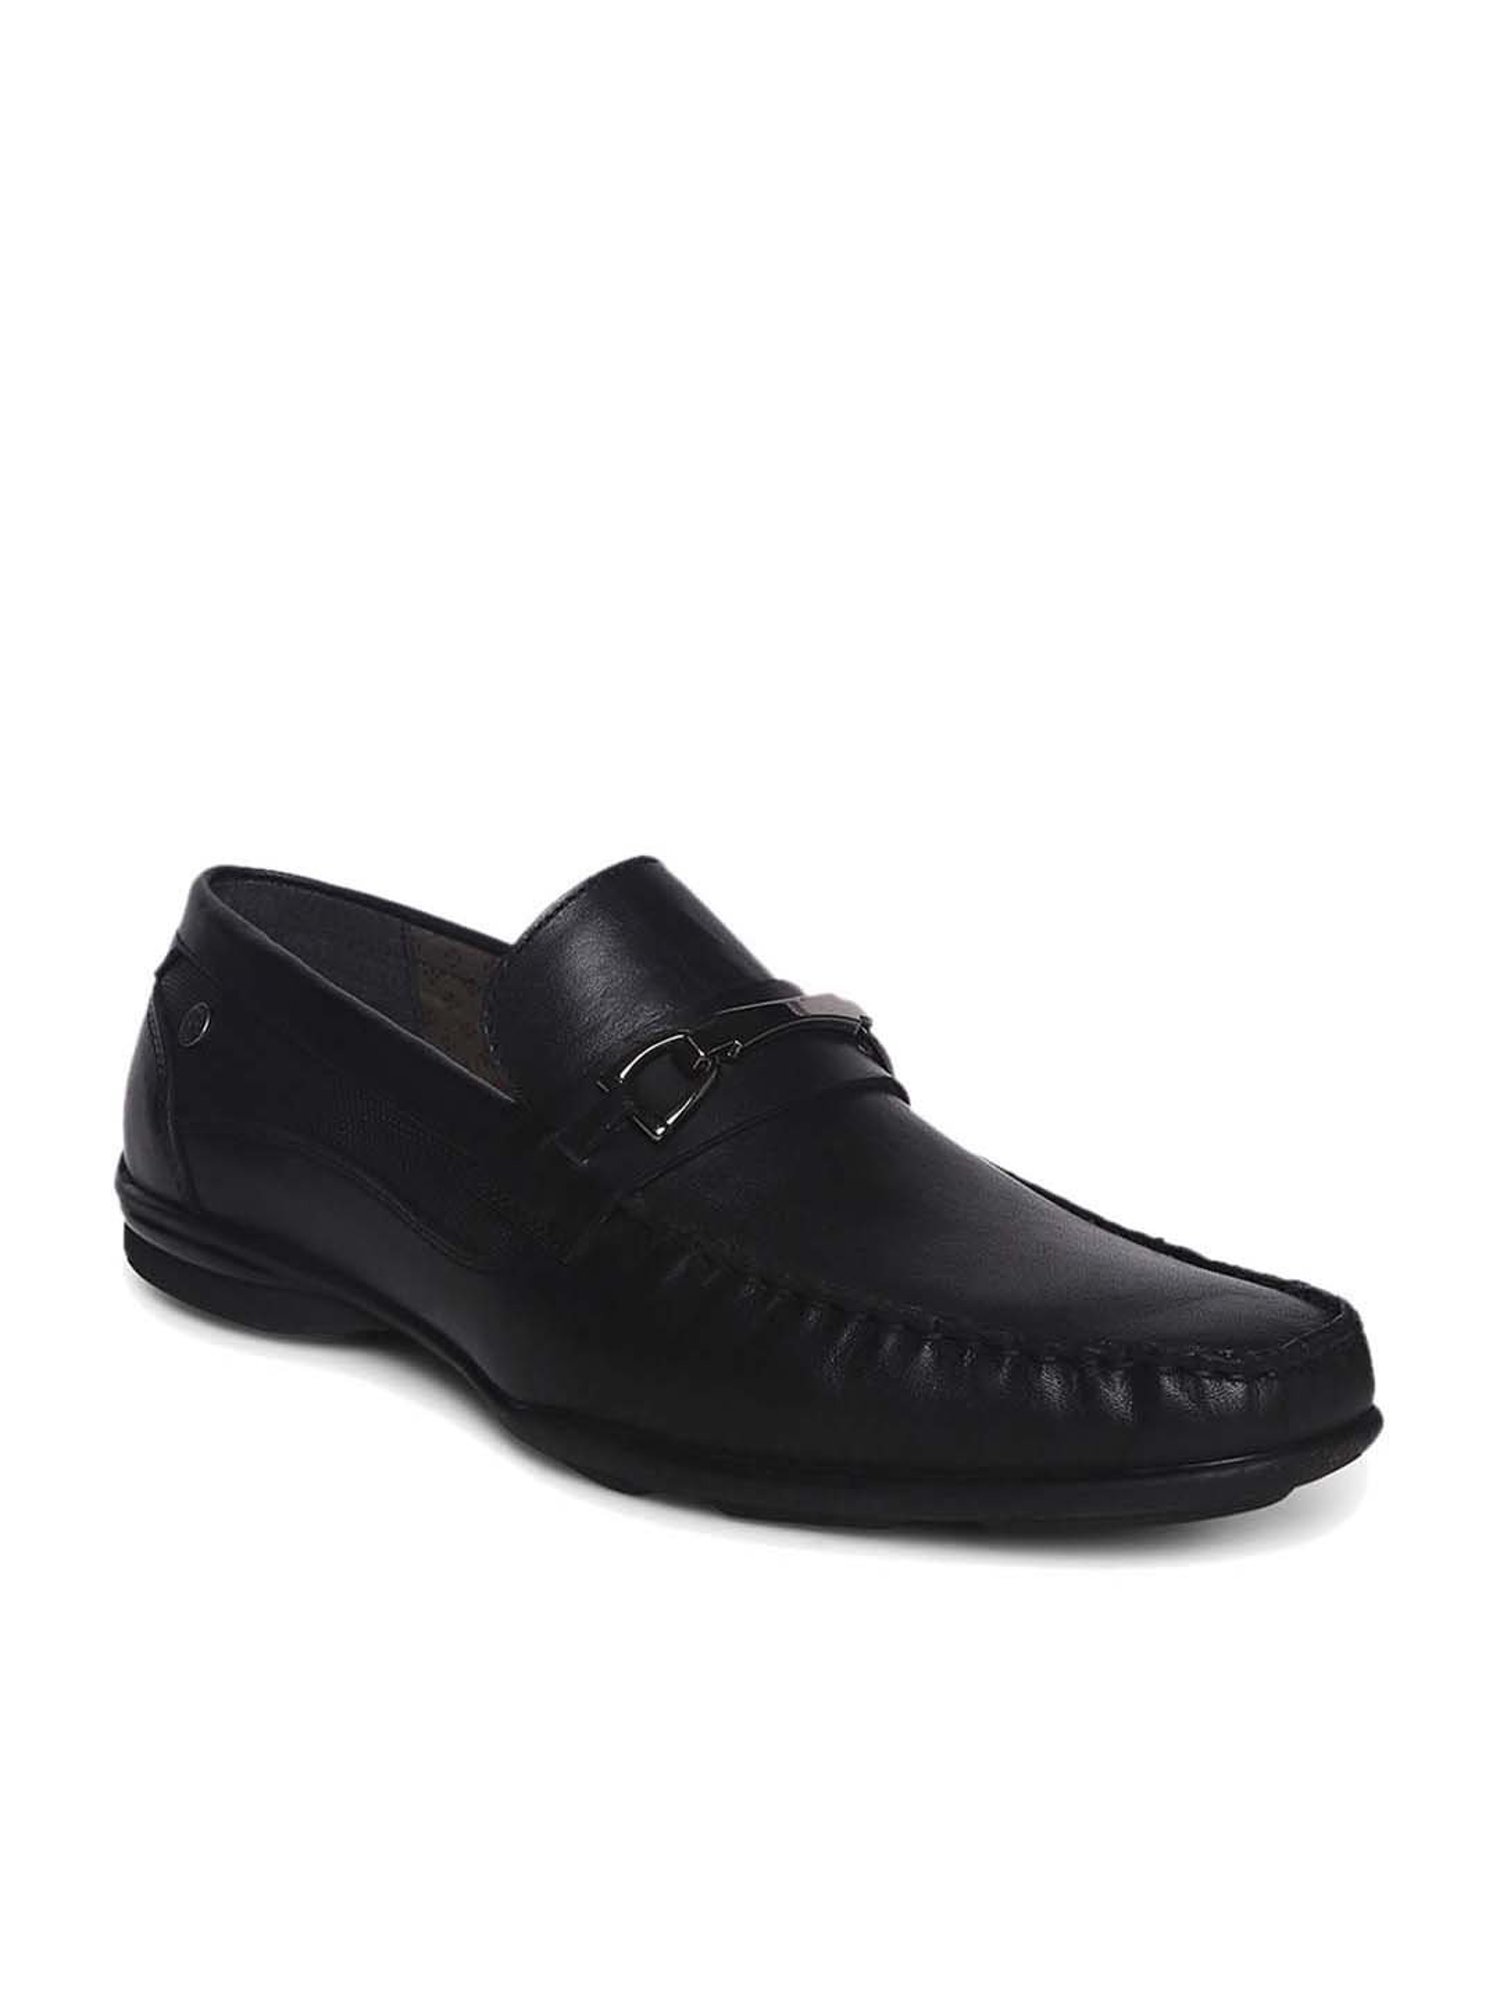 Lee Cooper Men's Black Loafers-Lee Cooper-Footwear-TATA CLIQ